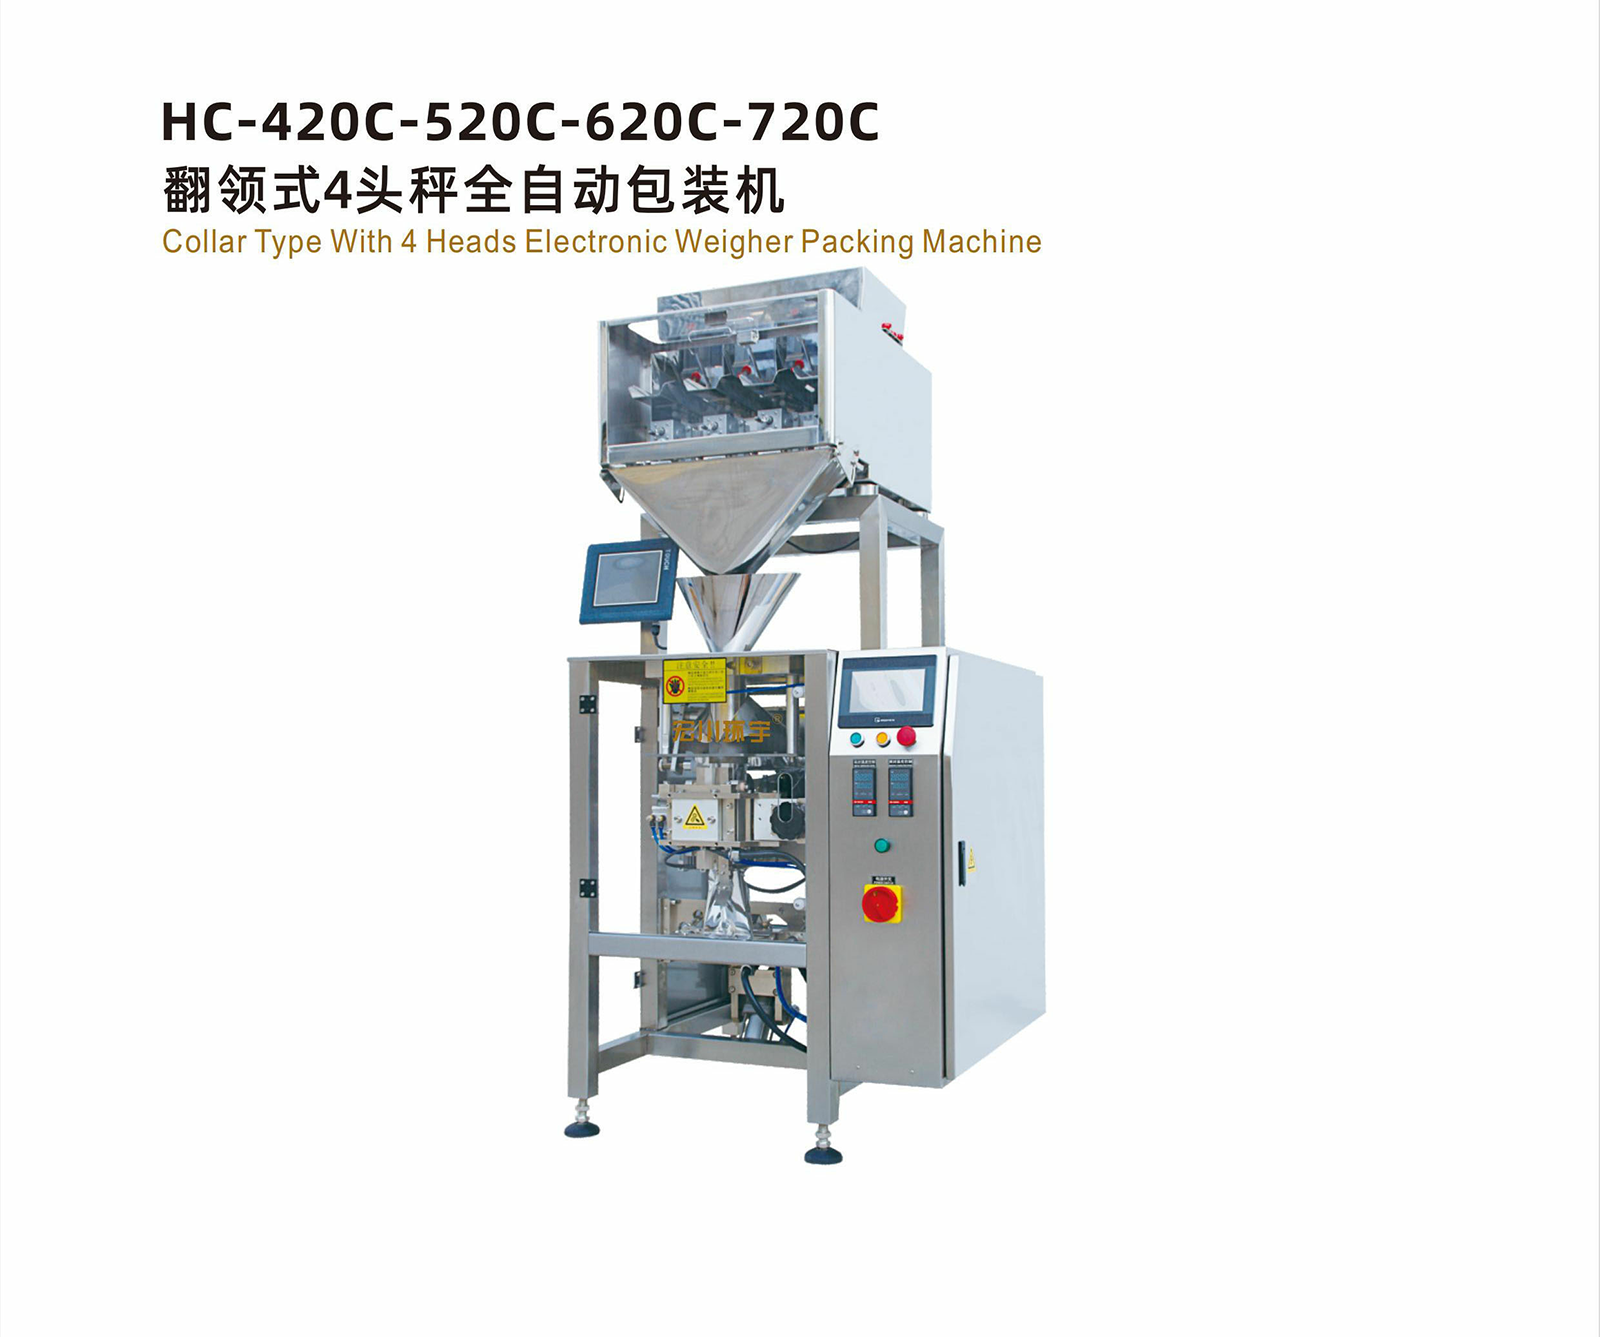 HC-420C-520C620C-720C翻领式4头秤全自动包装机 - 04-翻领式包装机 - 1